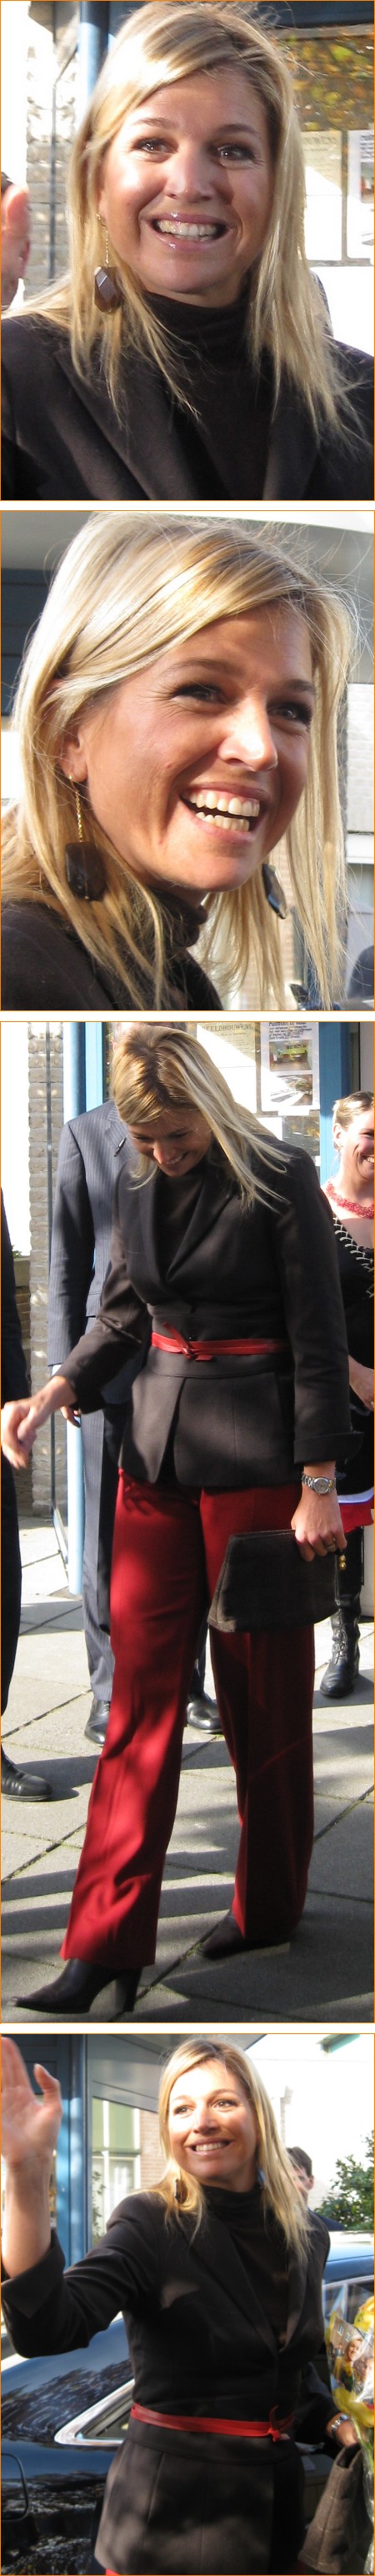 Máxima in Zeist, 28 oktober 2009